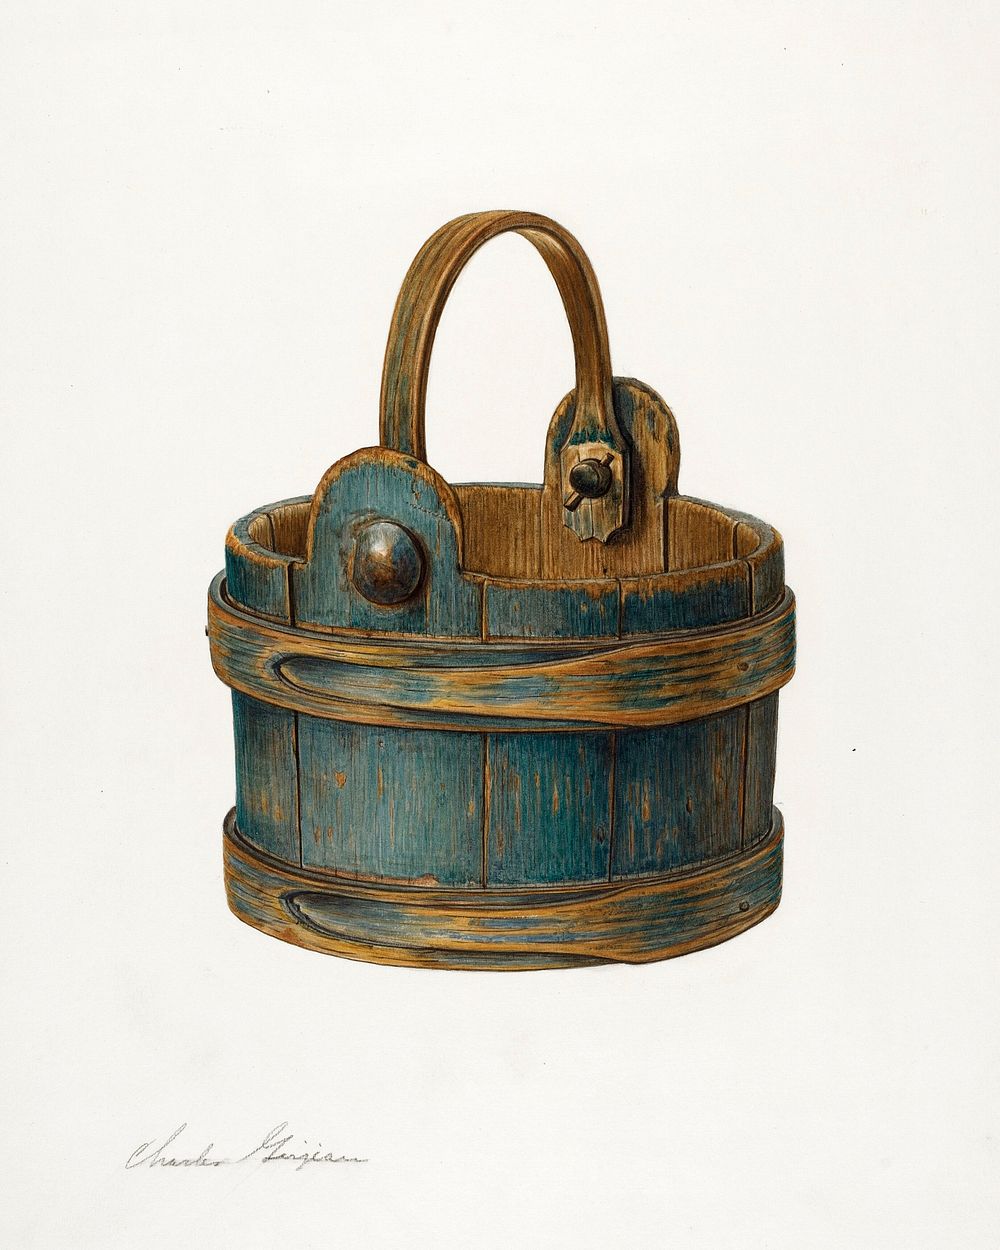 Wooden Bucket (ca.1939) by Charles Garjian. Original from The National Gallery of Art. Digitally enhanced by rawpixel.